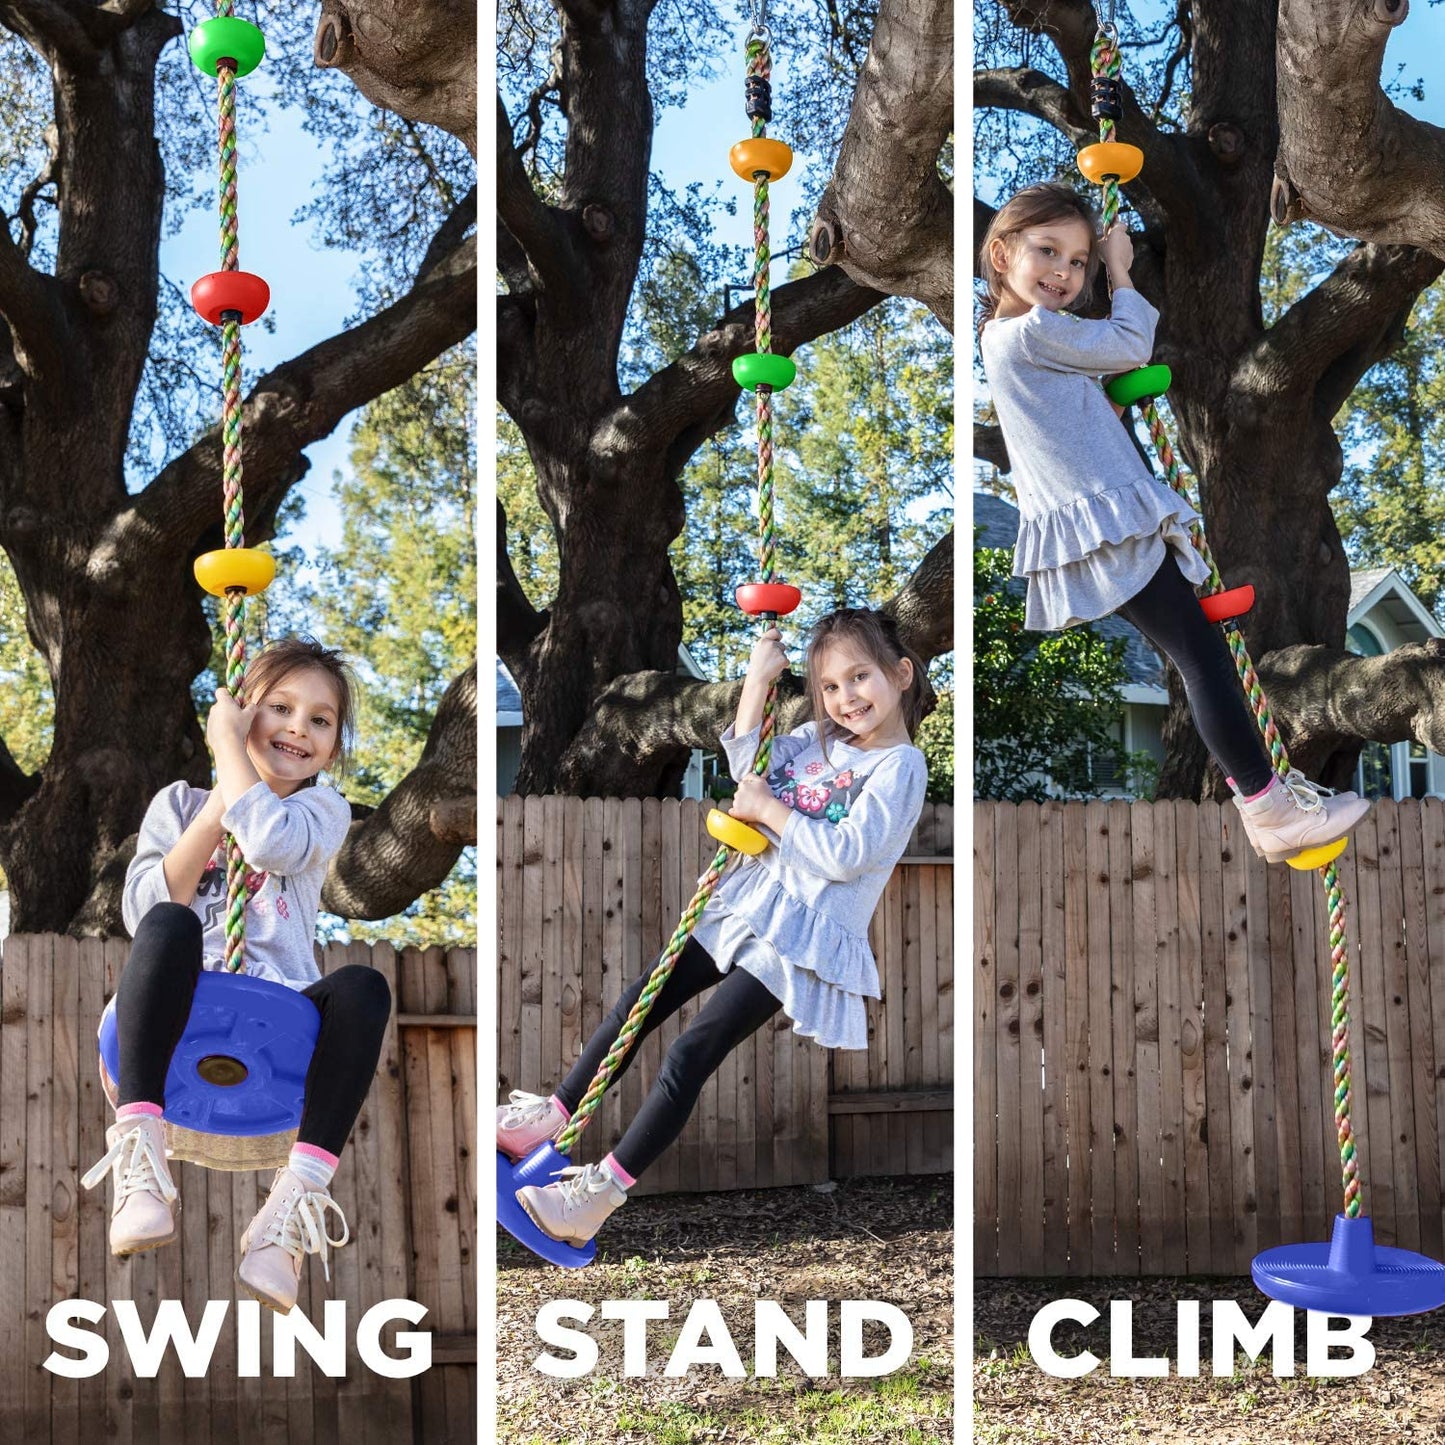 Swing-n-climb | Rope Swing Platform Climbers